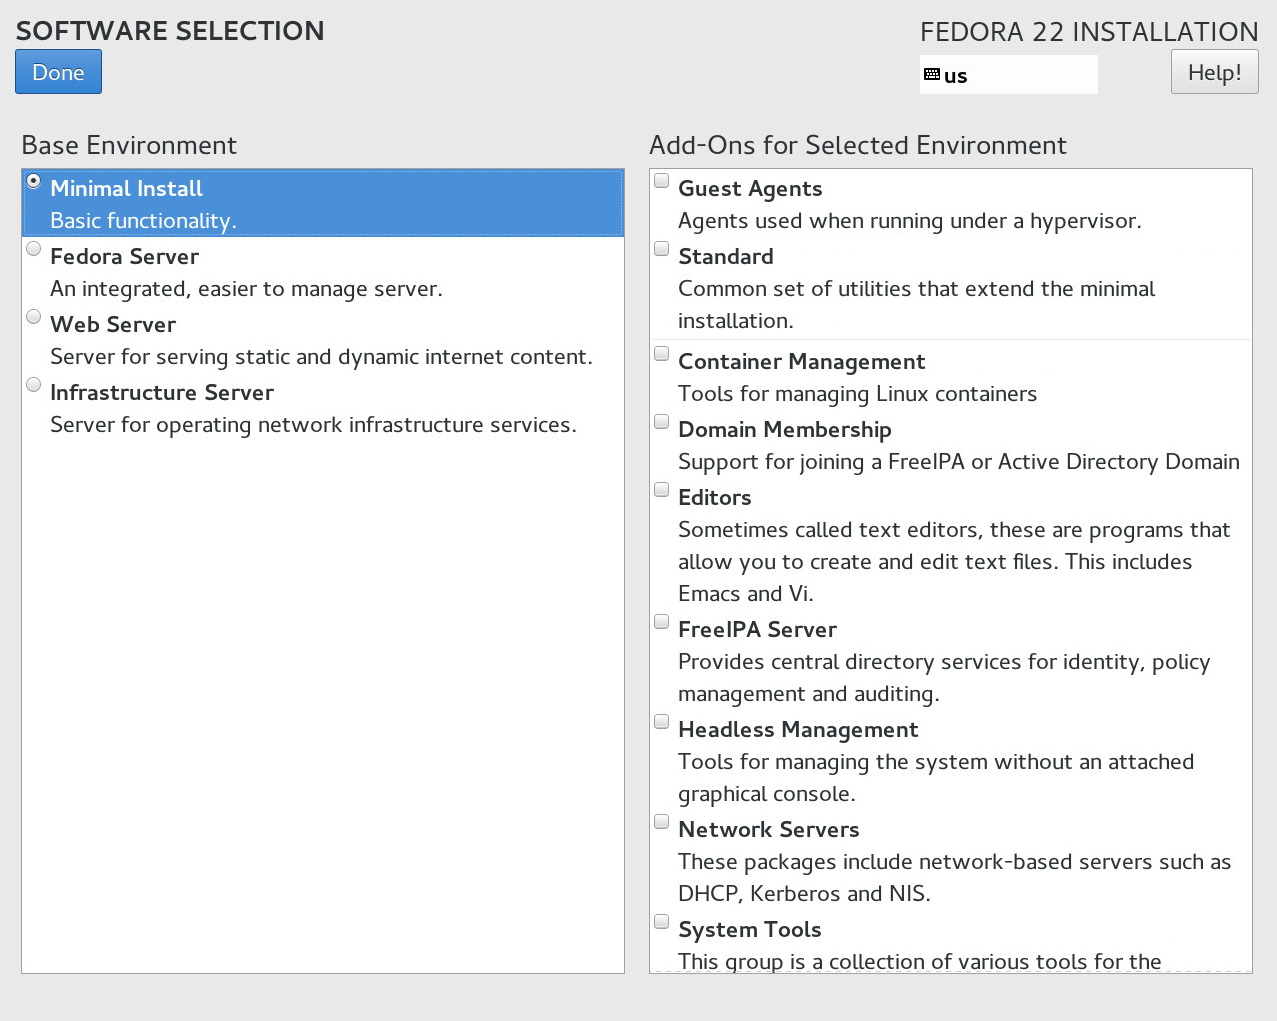 Fedora Installation Software Selection Screen